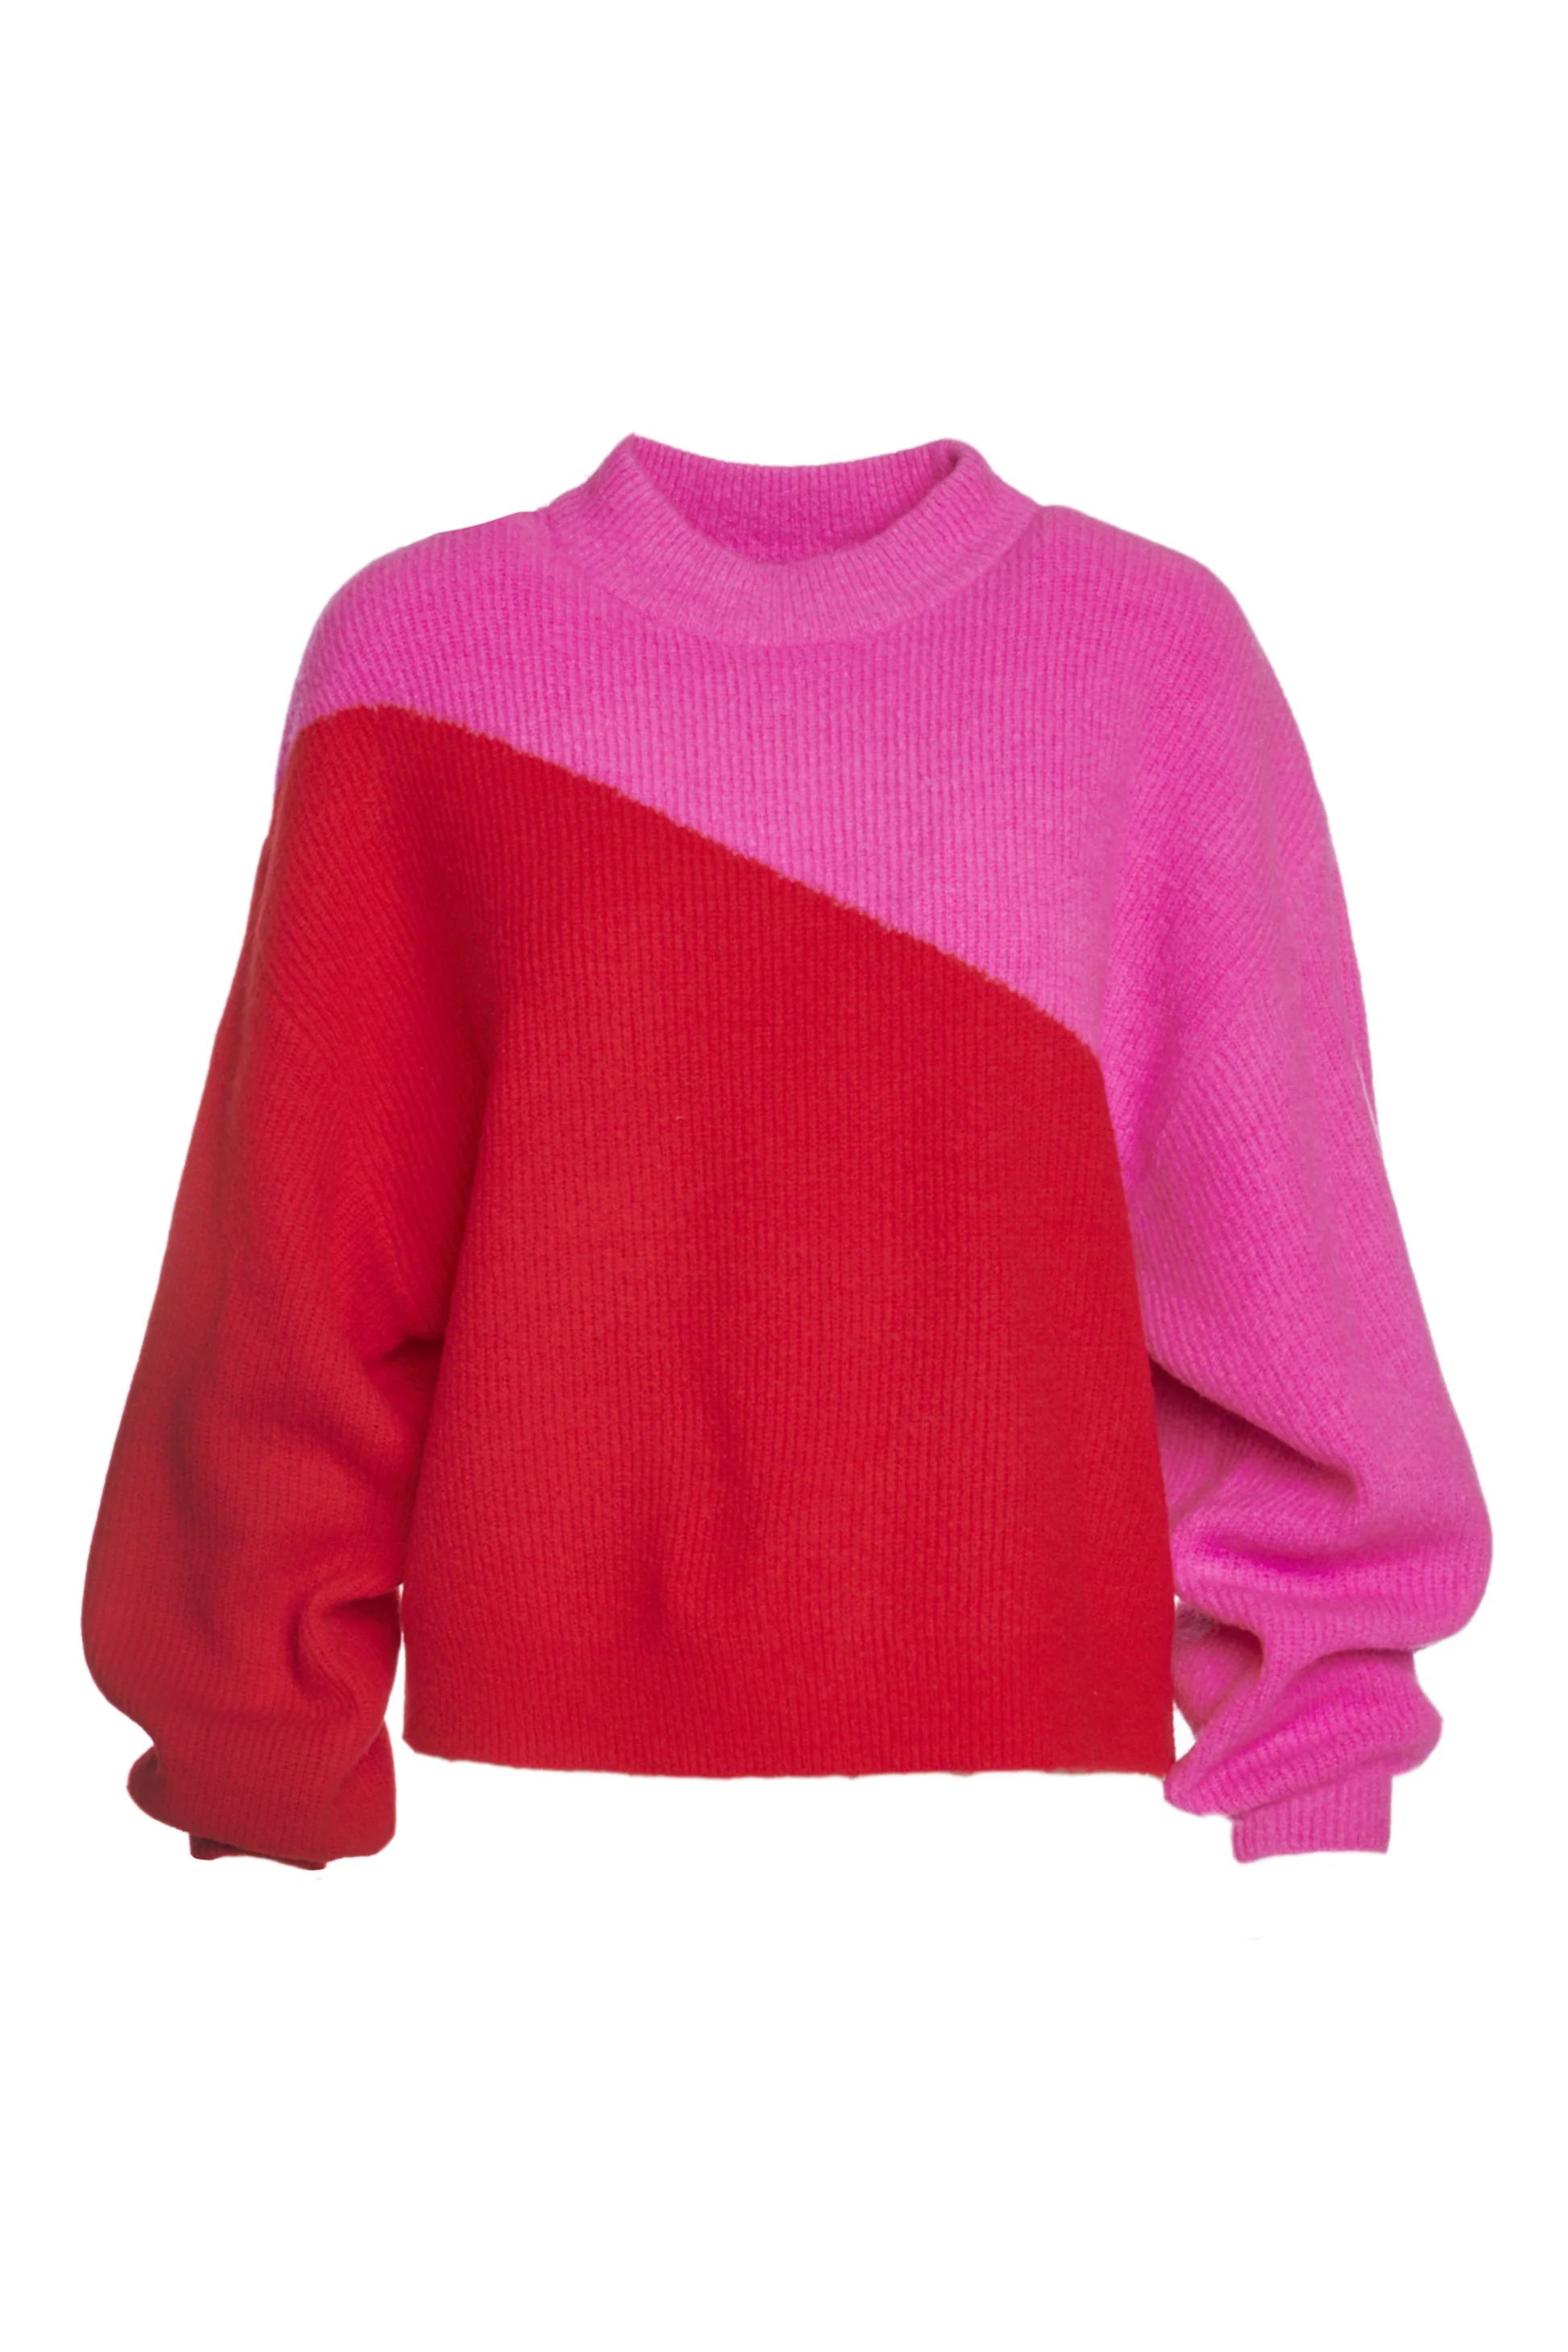 Miller Sweater in Mollie Pink / Lollipop Red - CROSBY by Mollie Burch | CROSBY by Mollie Burch